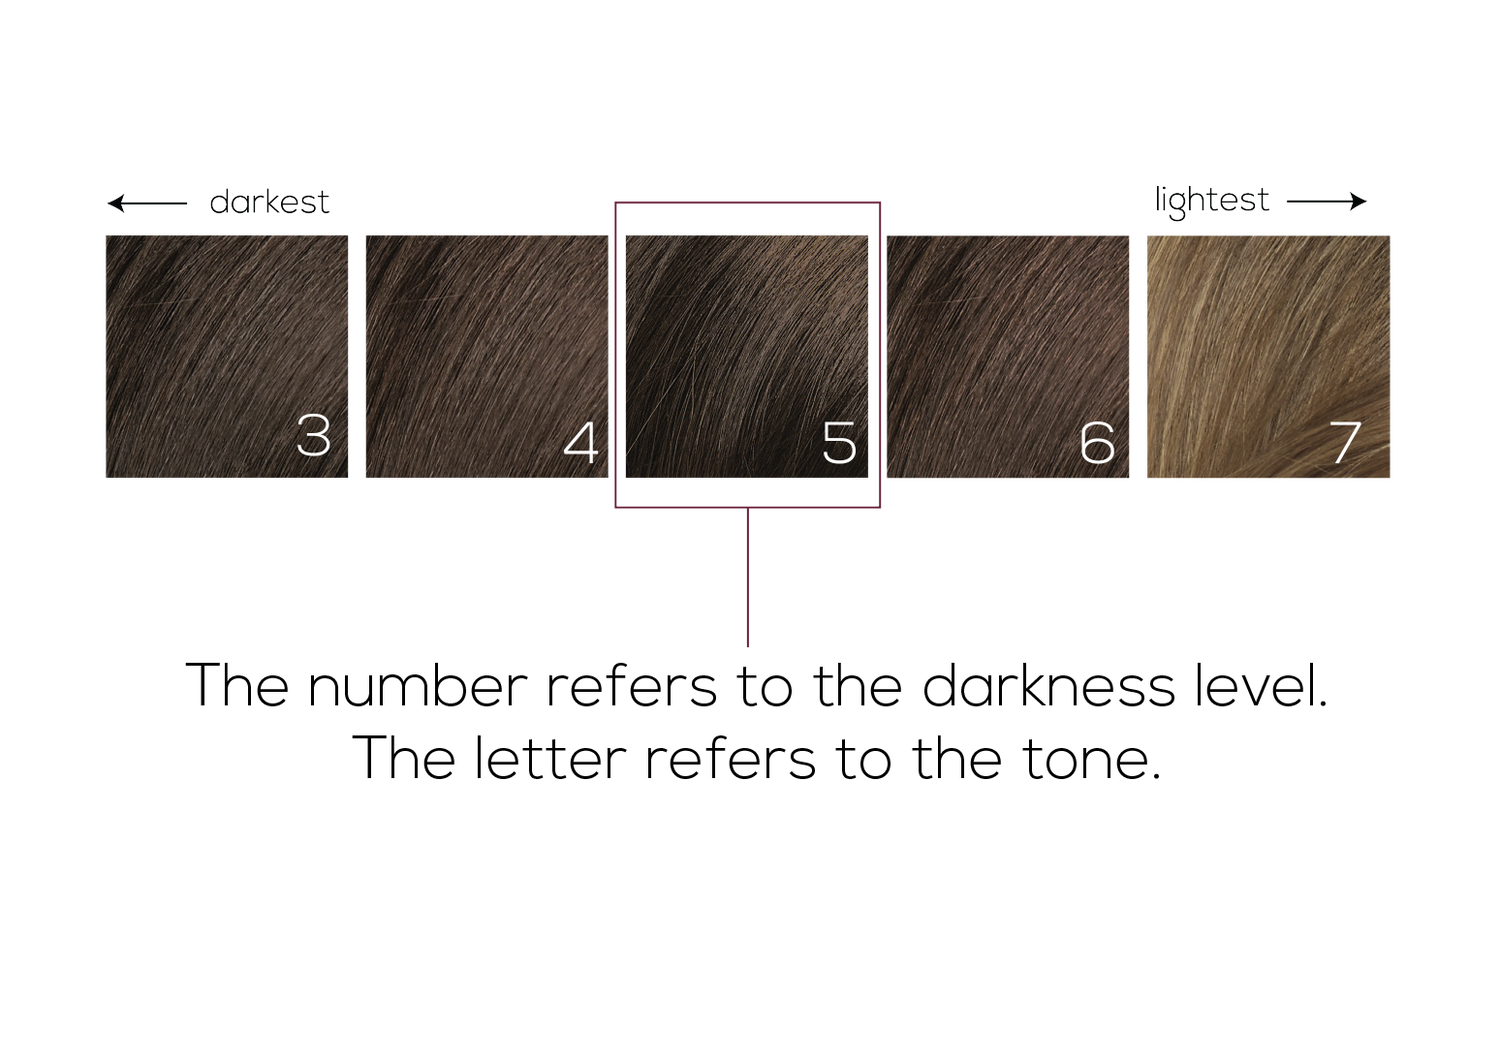 dark hair color chart